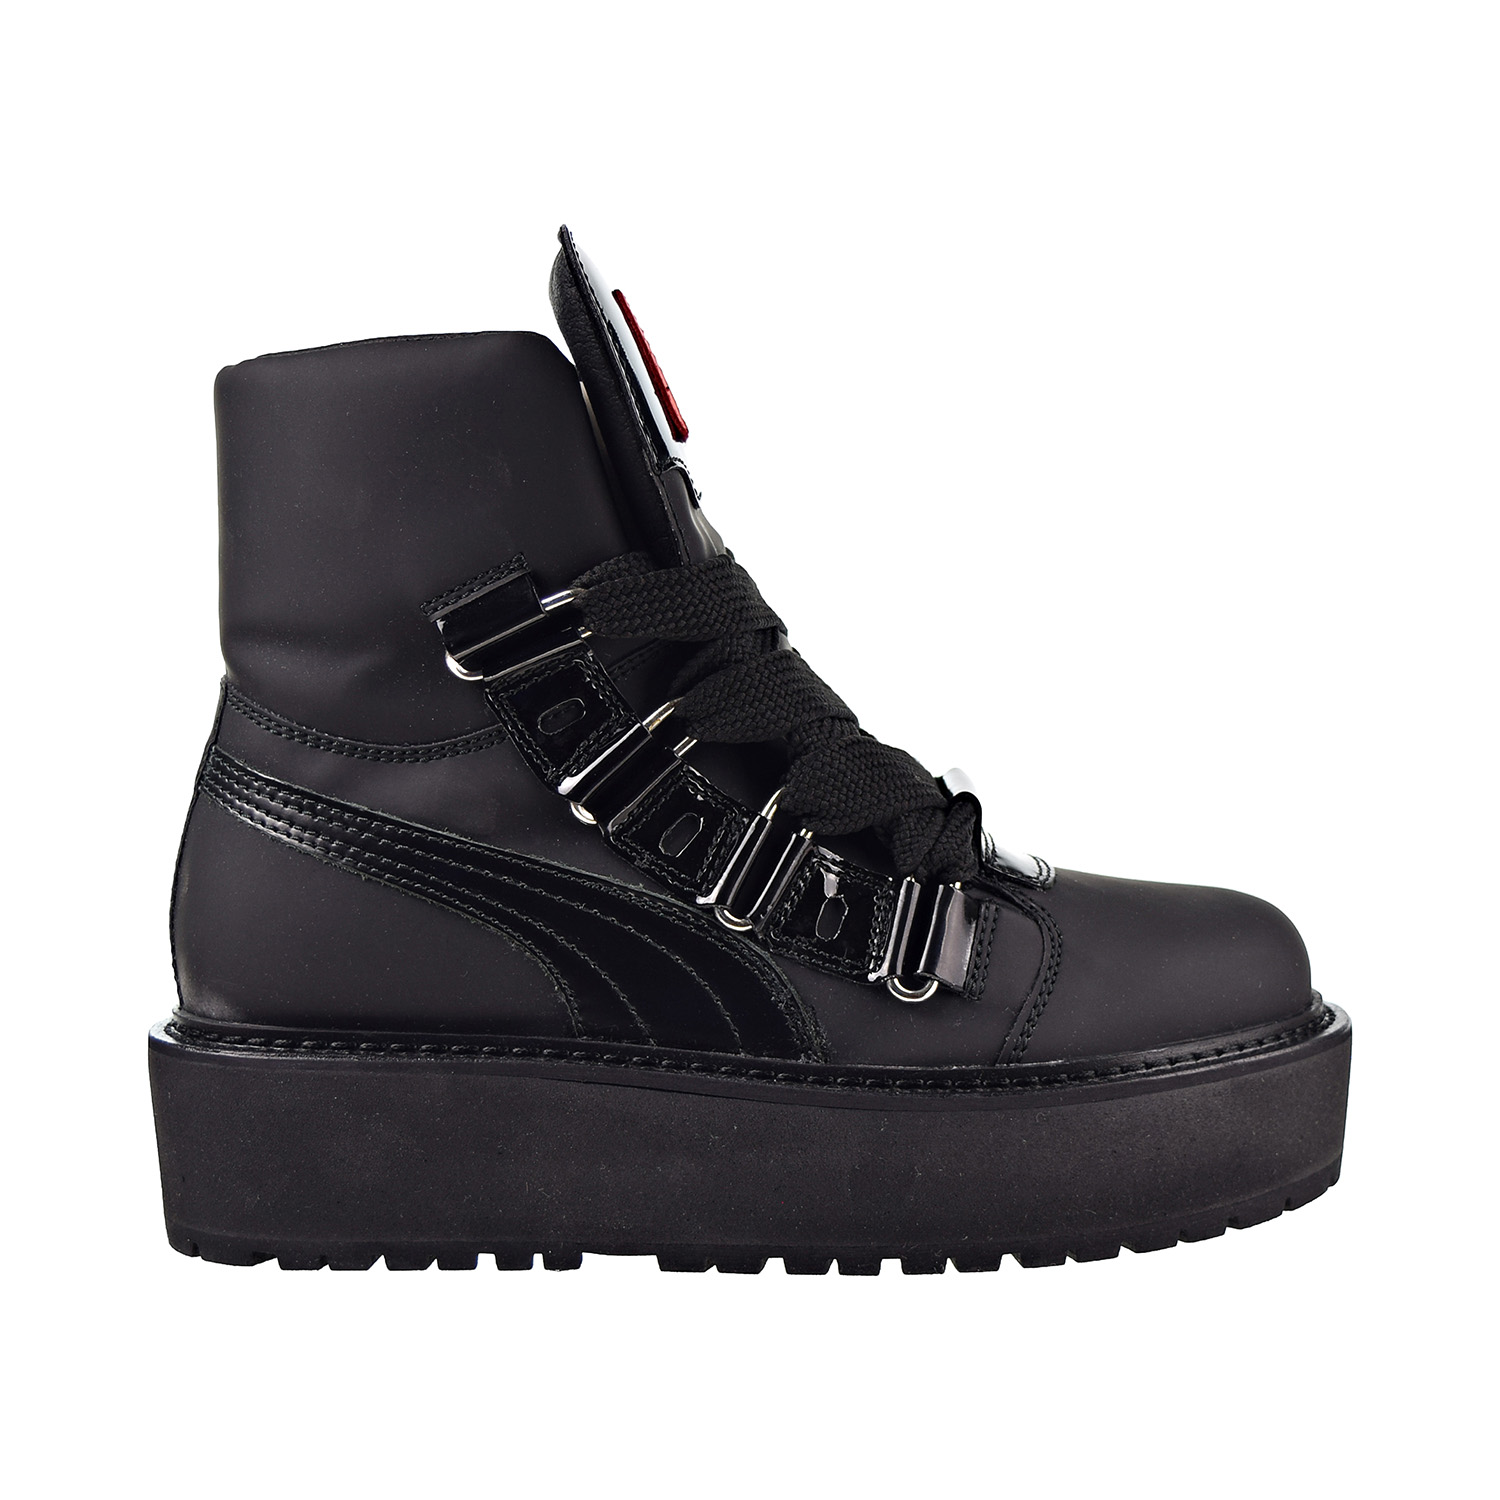 Puma Fenty By Rihanna Men's Platform Sneaker Boots Puma Black 363040-01 - image 1 of 6